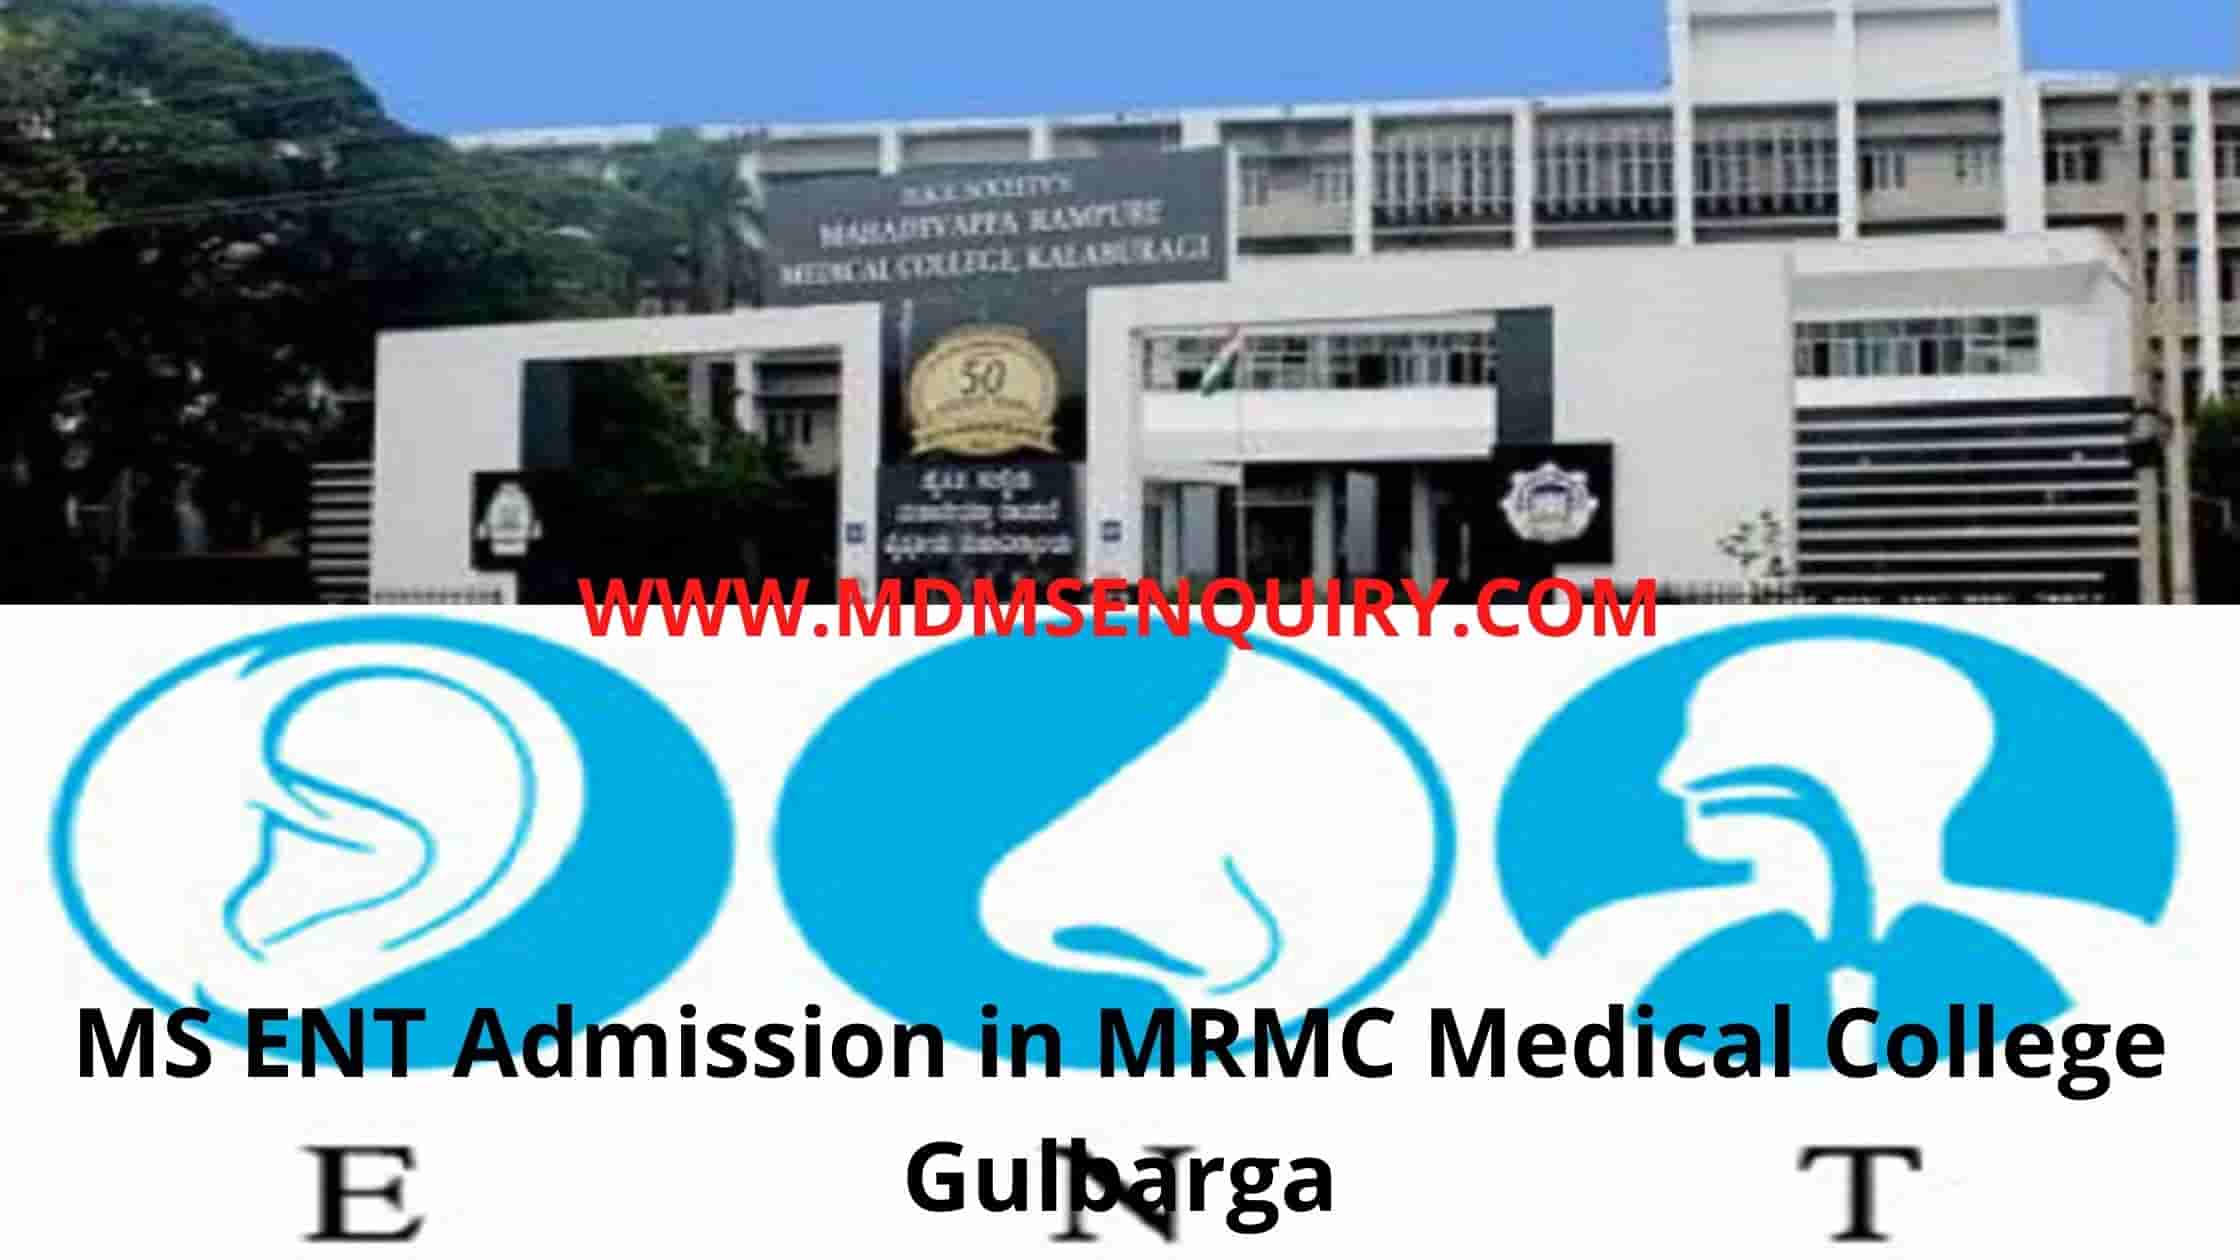 MS ENT Admission in MRMC Medical College Gulbarga